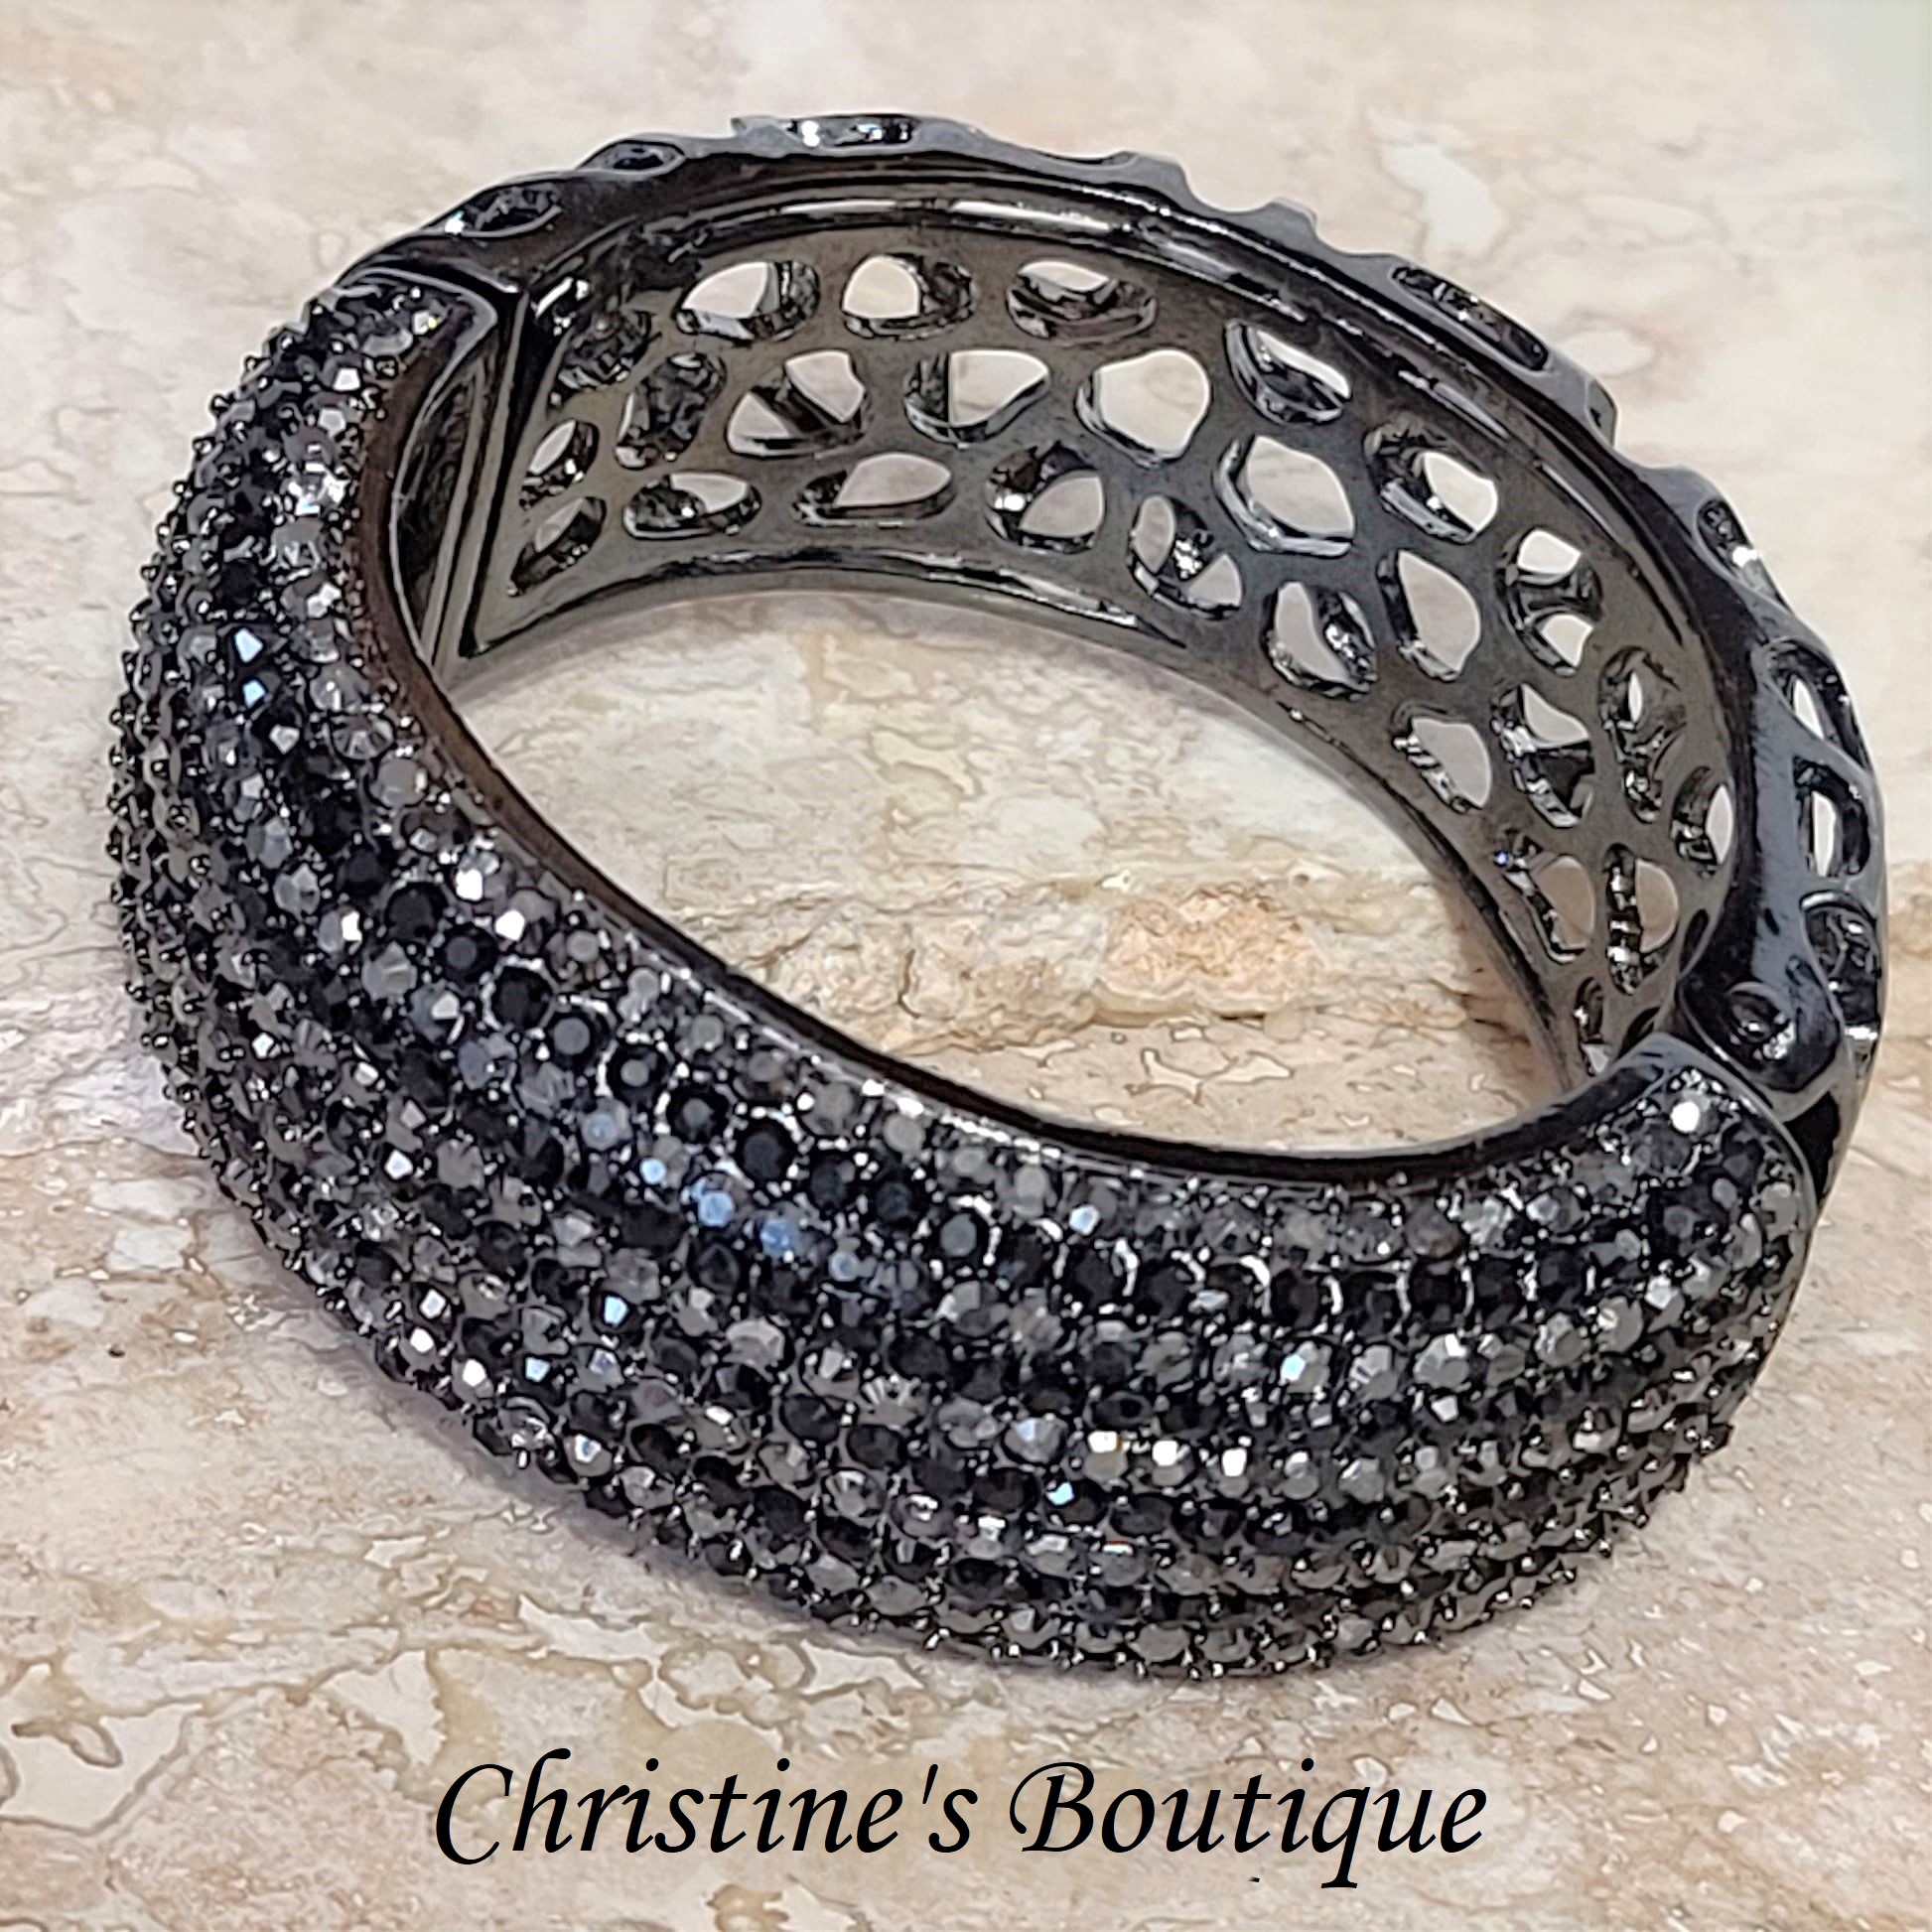 Rhinestone bracelet, large statement bracelet, oval bangle bracelet in two tone rhinestone - Click Image to Close